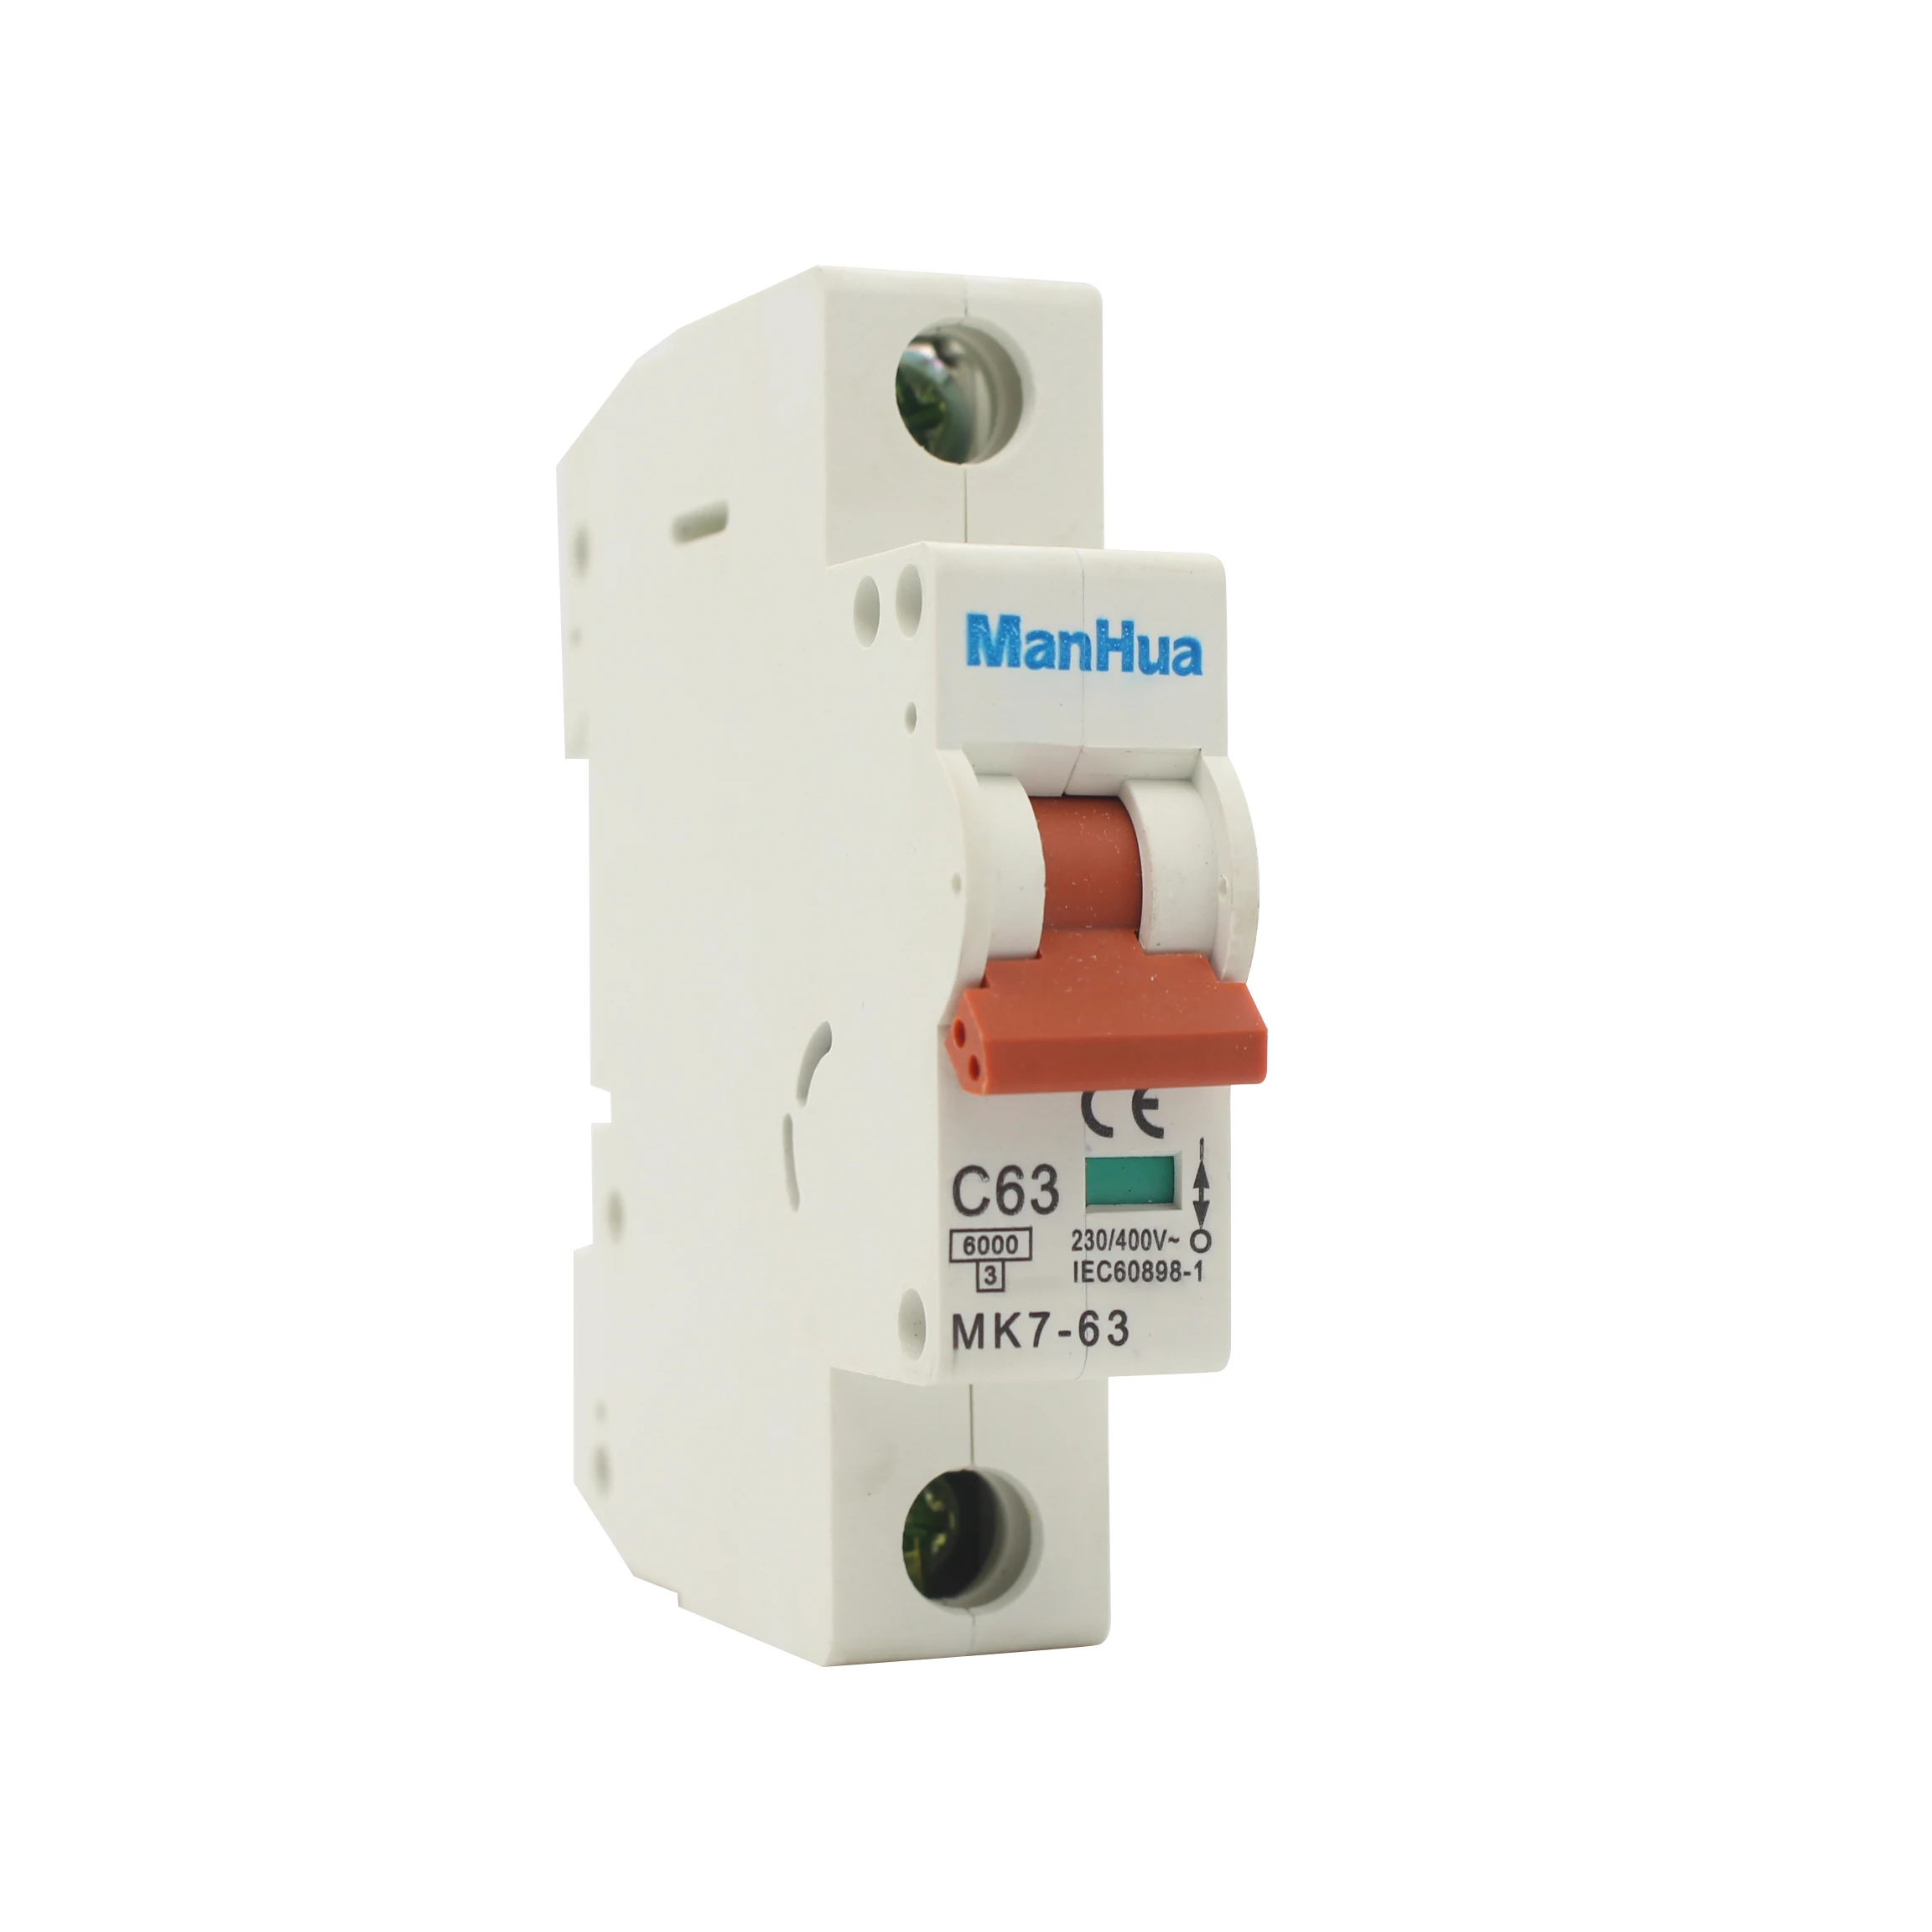 ManHua MK7-63 6000A стандарт ЕС конструкция 1P~ 230/400V 6A 16A 20A 32A 63A CE сертификат выключатели Мини автоматический выключатель